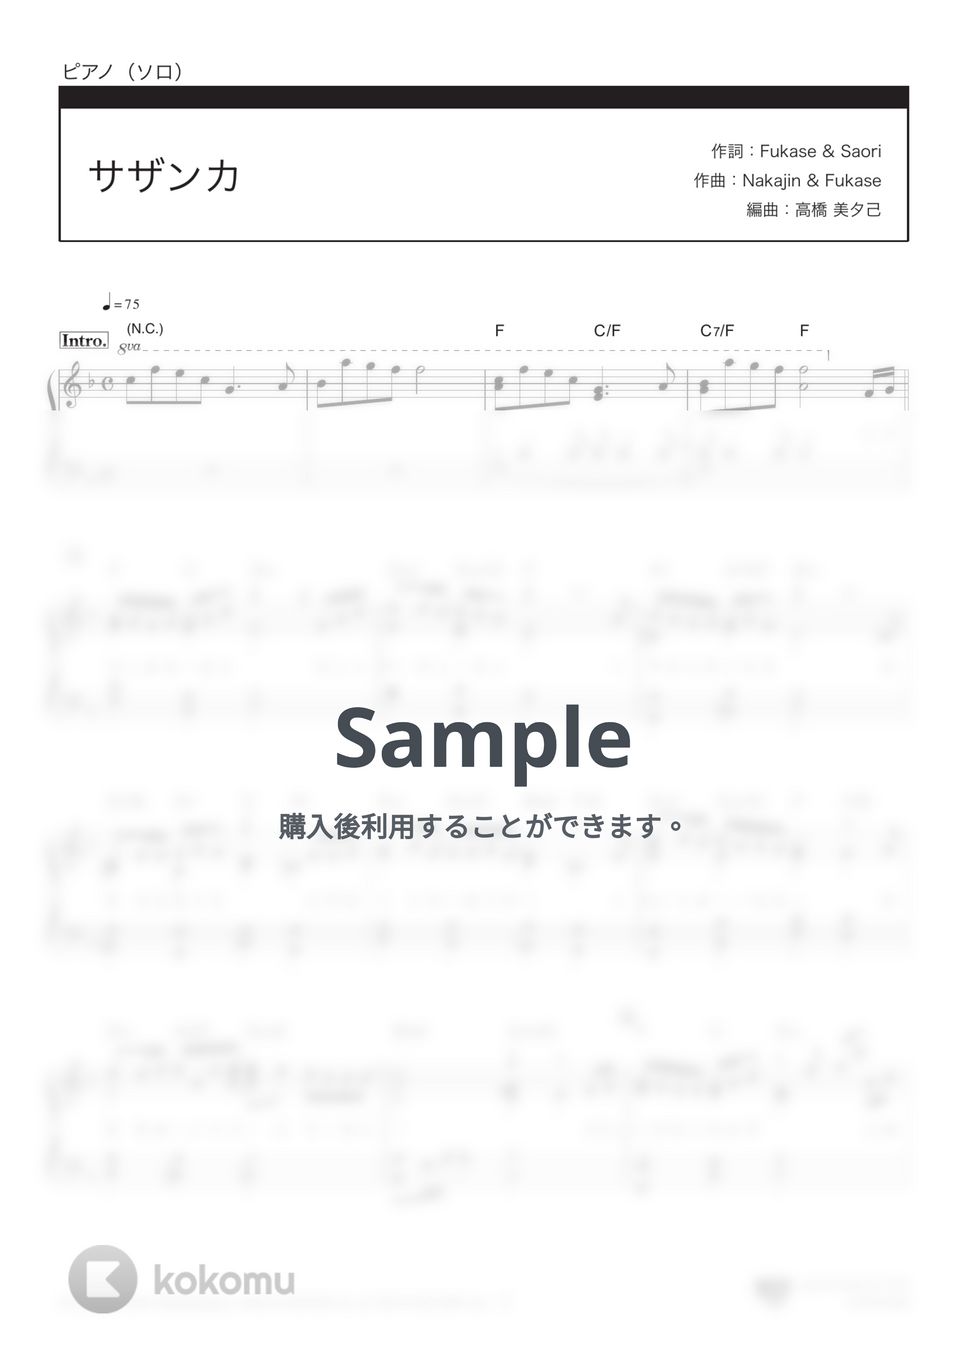 SEKAI NO OWARI - サザンカ (NHKピョンチャン2018放送テーマソング) by 楽譜仕事人_高橋美夕己